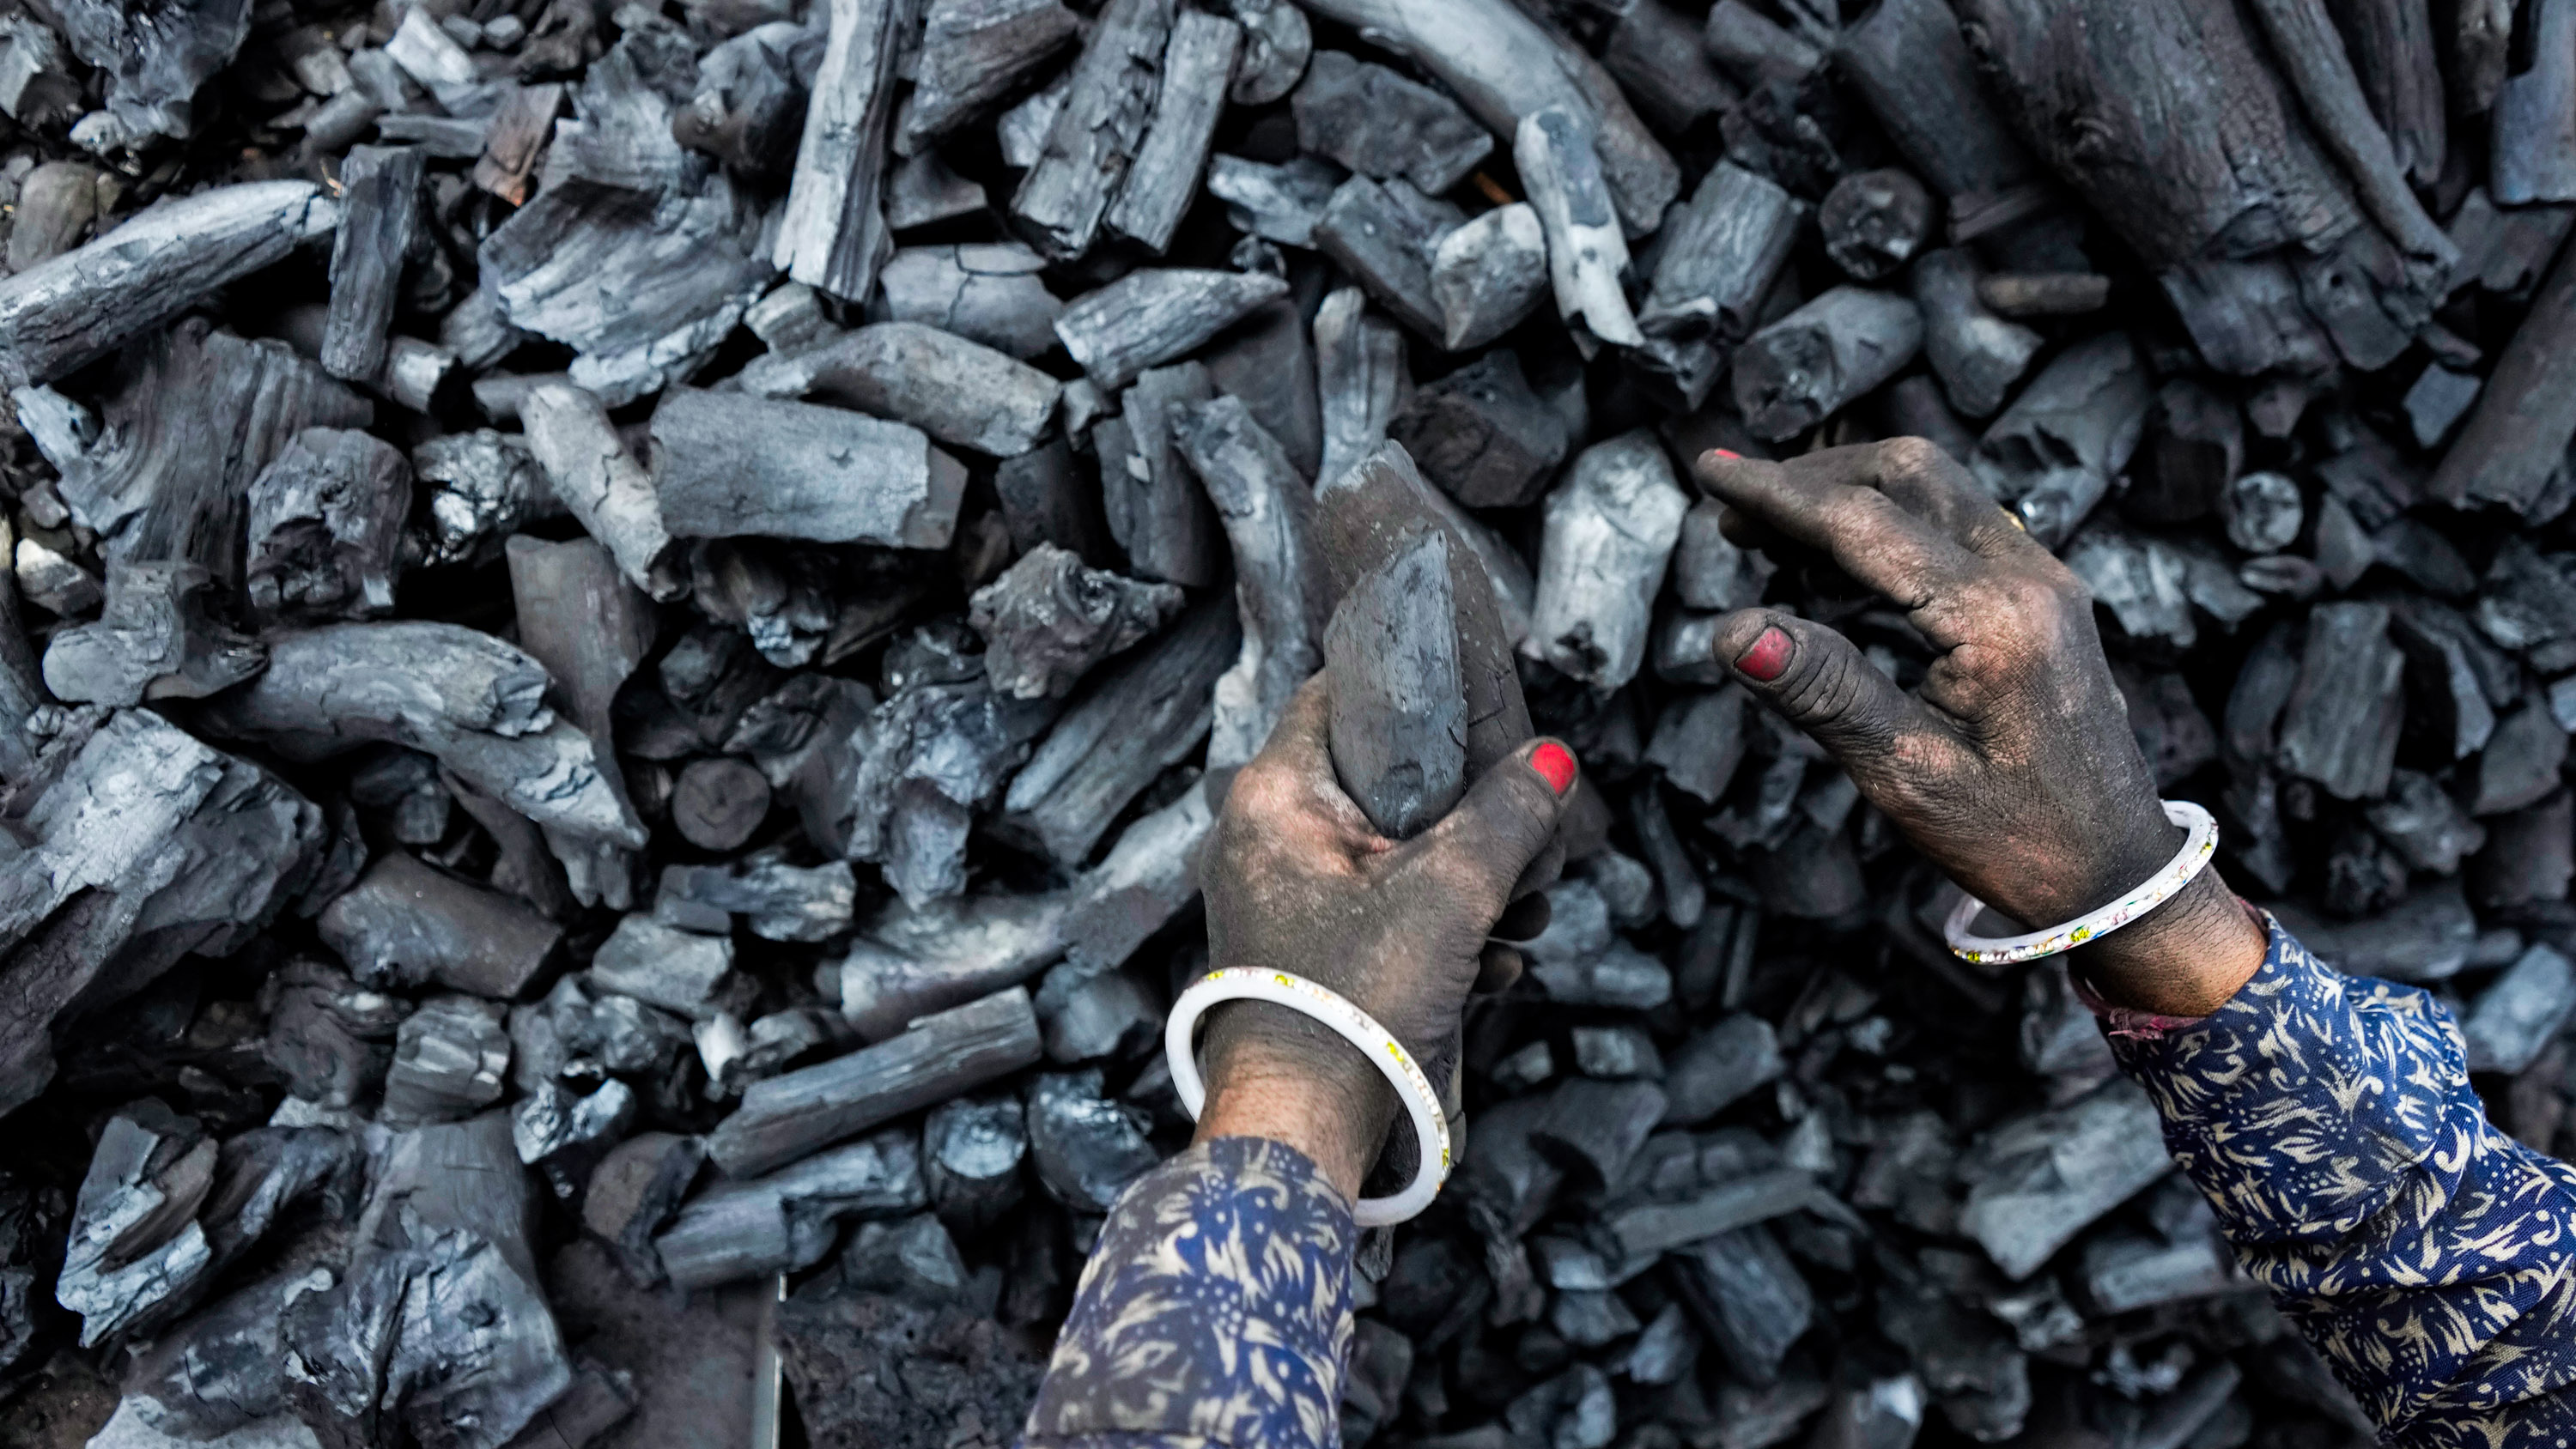 Hands of a woman sifting through pieces at a coal depot